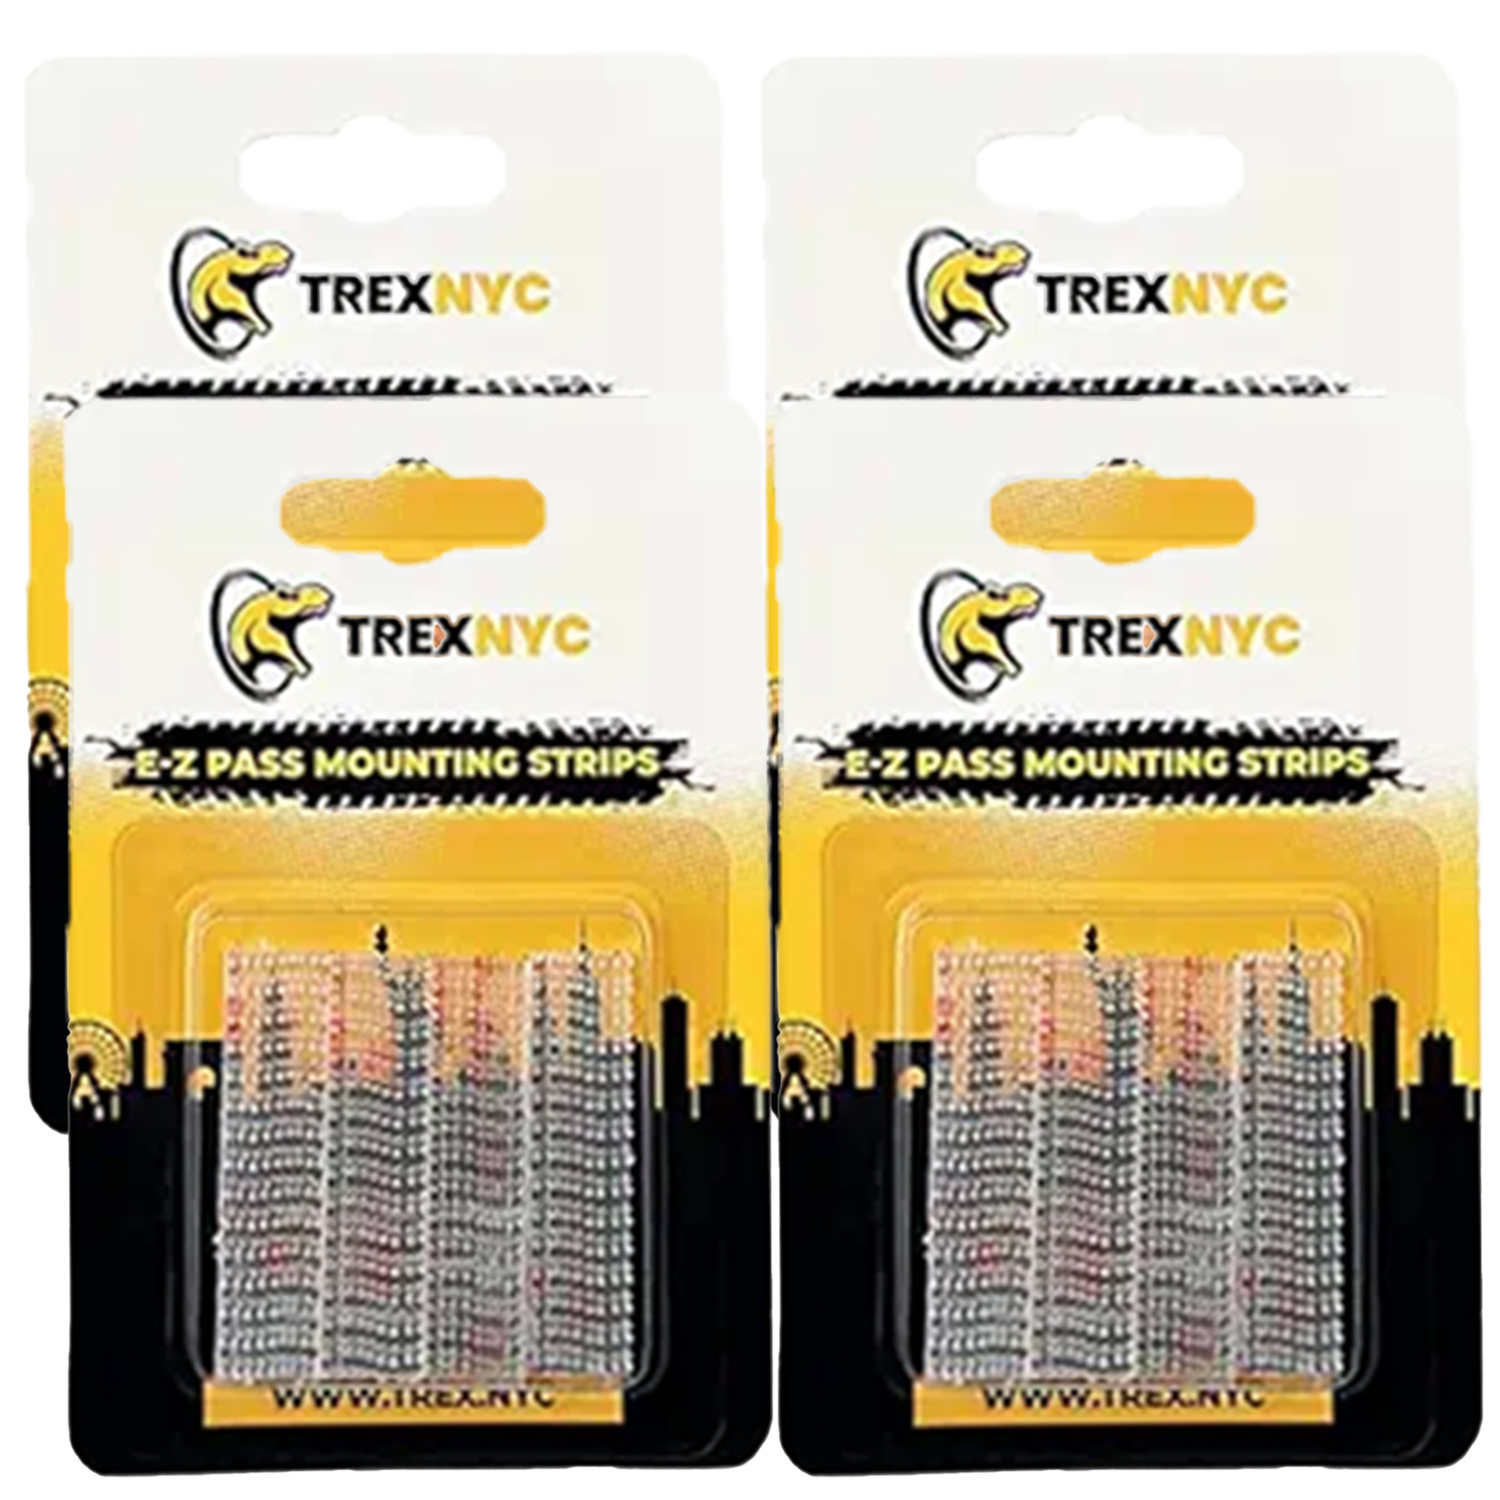 TrexNYC EZ Pass Mounting Strips, Heavy-Duty EZPass/IPass/Toll Pass